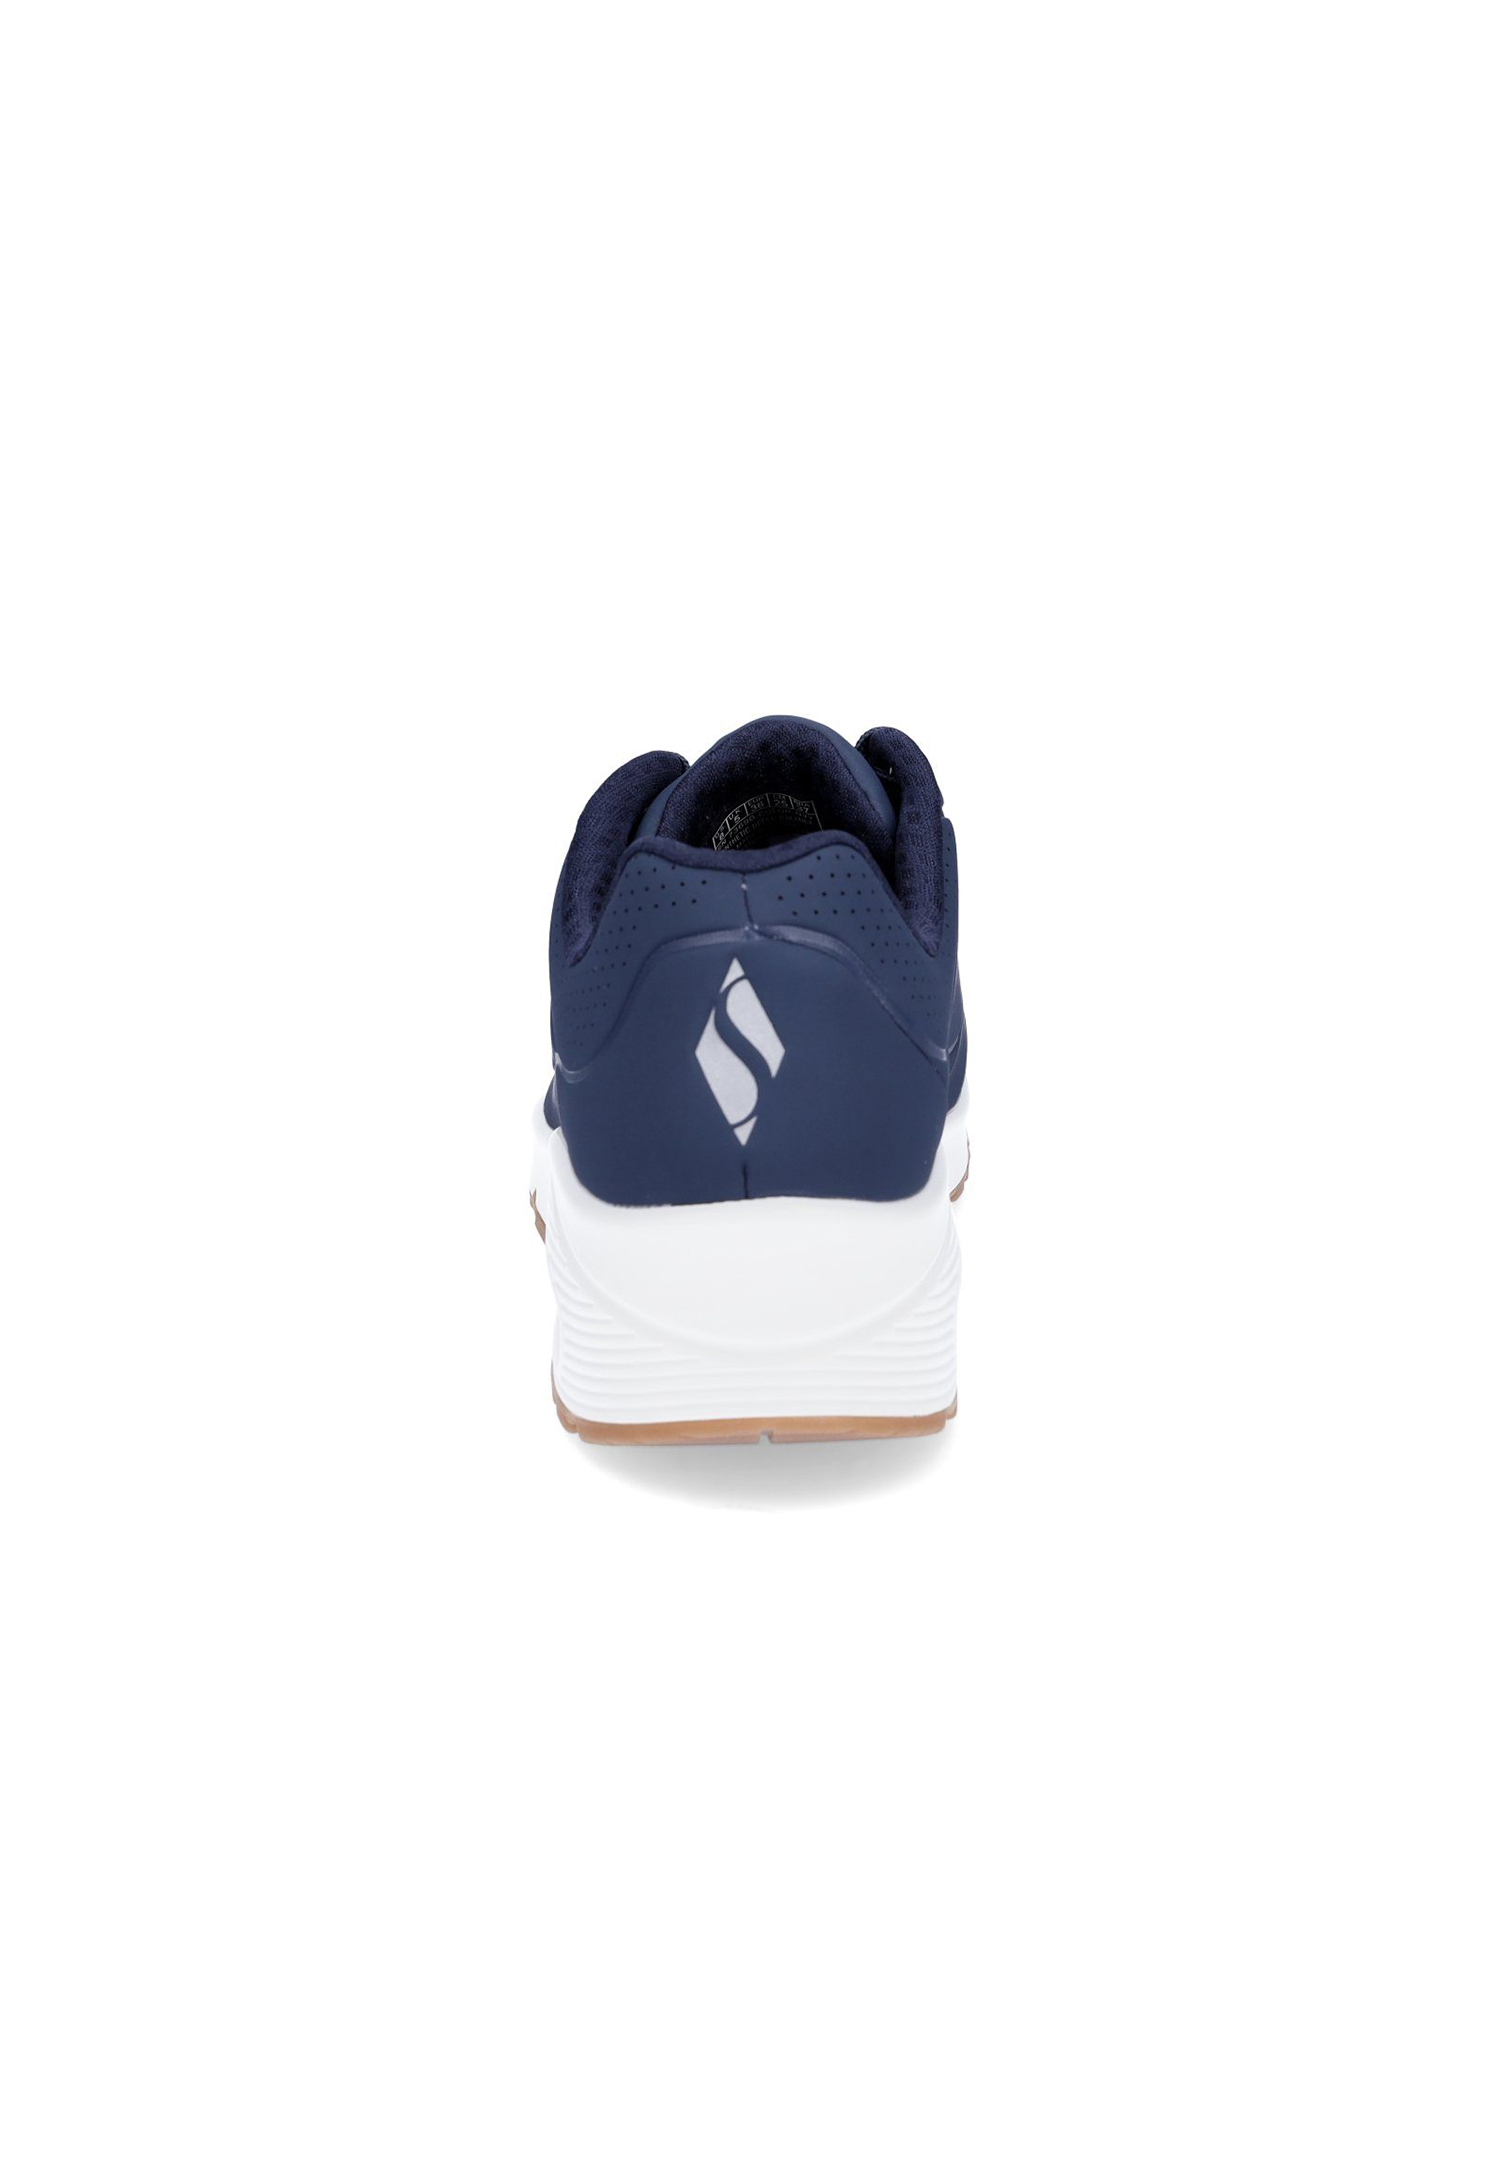 Skecher Street Uno -STAND ON AIR Damen Sneaker 73690 NVY navy